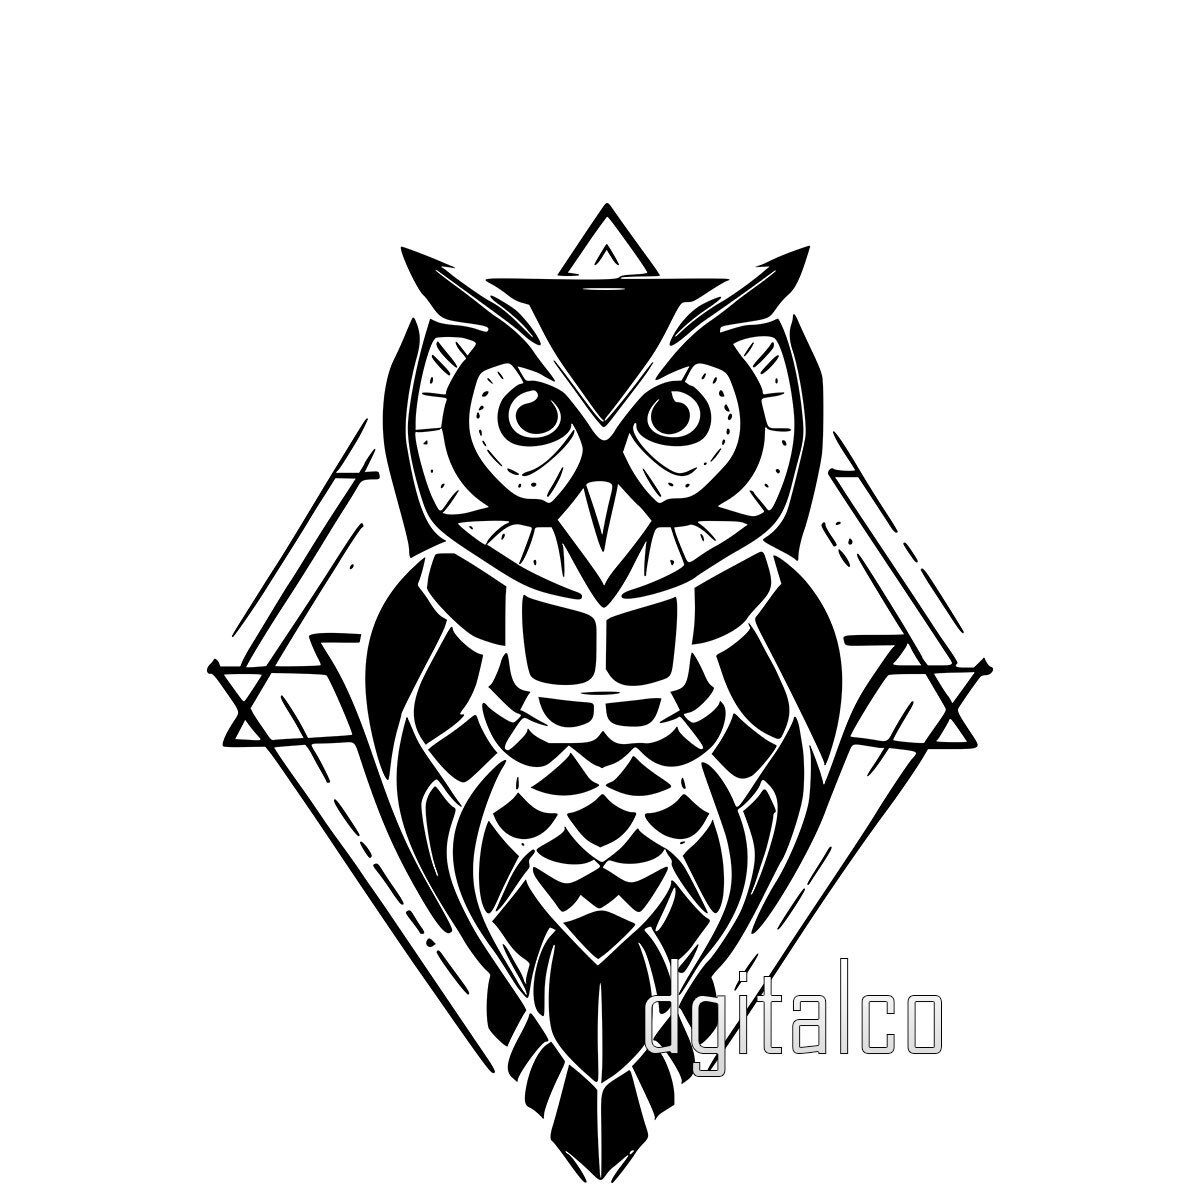 101 Amazing Geometric Owl Tattoo Designs You Must See! | Owl tattoo design,  Tattoos for women, Tattoos for guys